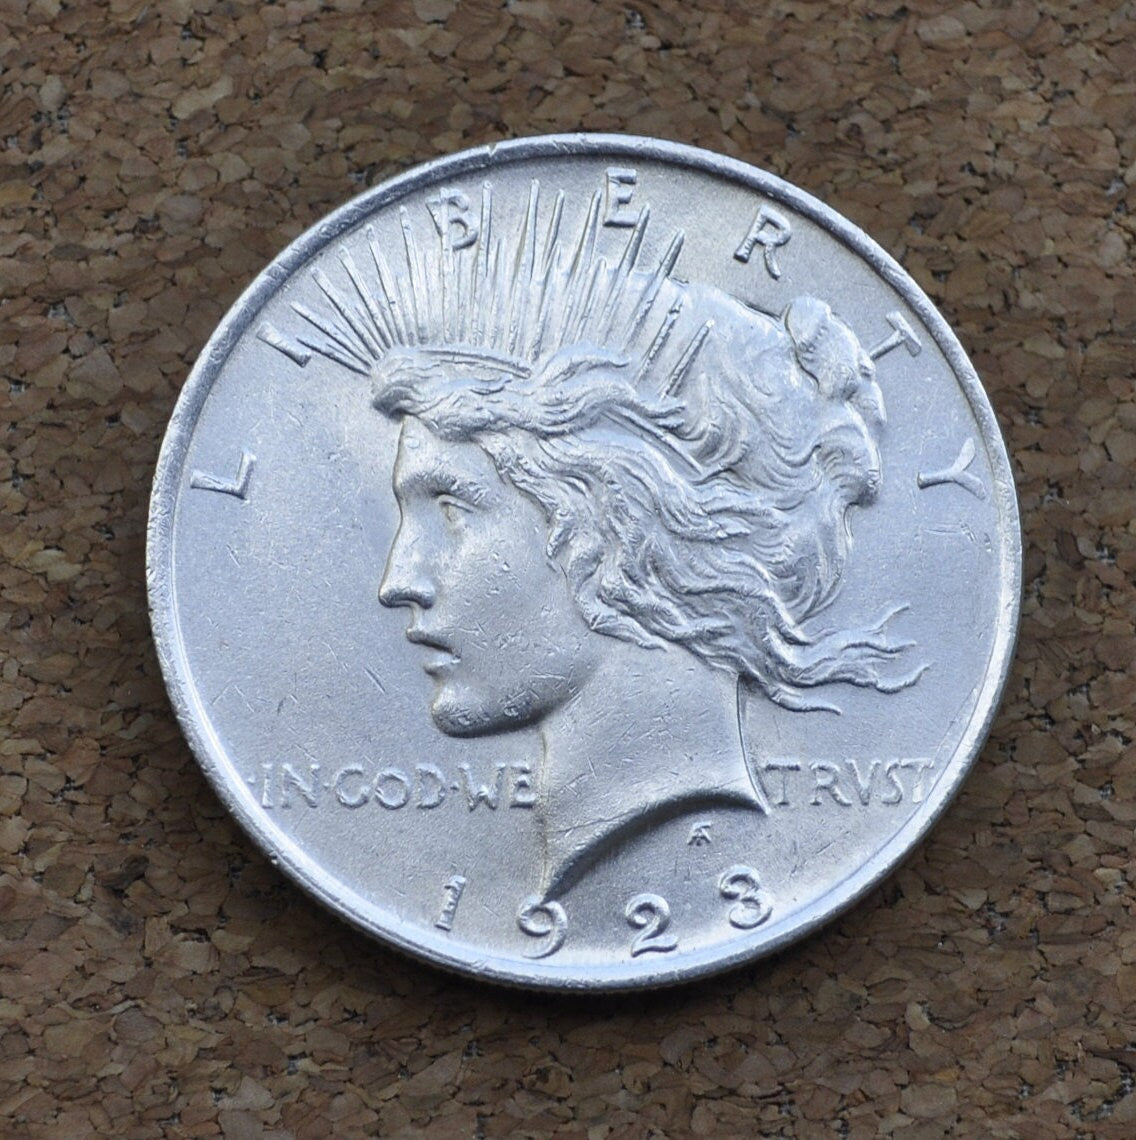 1923 Peace Silver Dollar - MS62 (Uncirculated) Grade & Condition - Philadelphia Mint - Silver Dollar - 1923P Peace Dollar